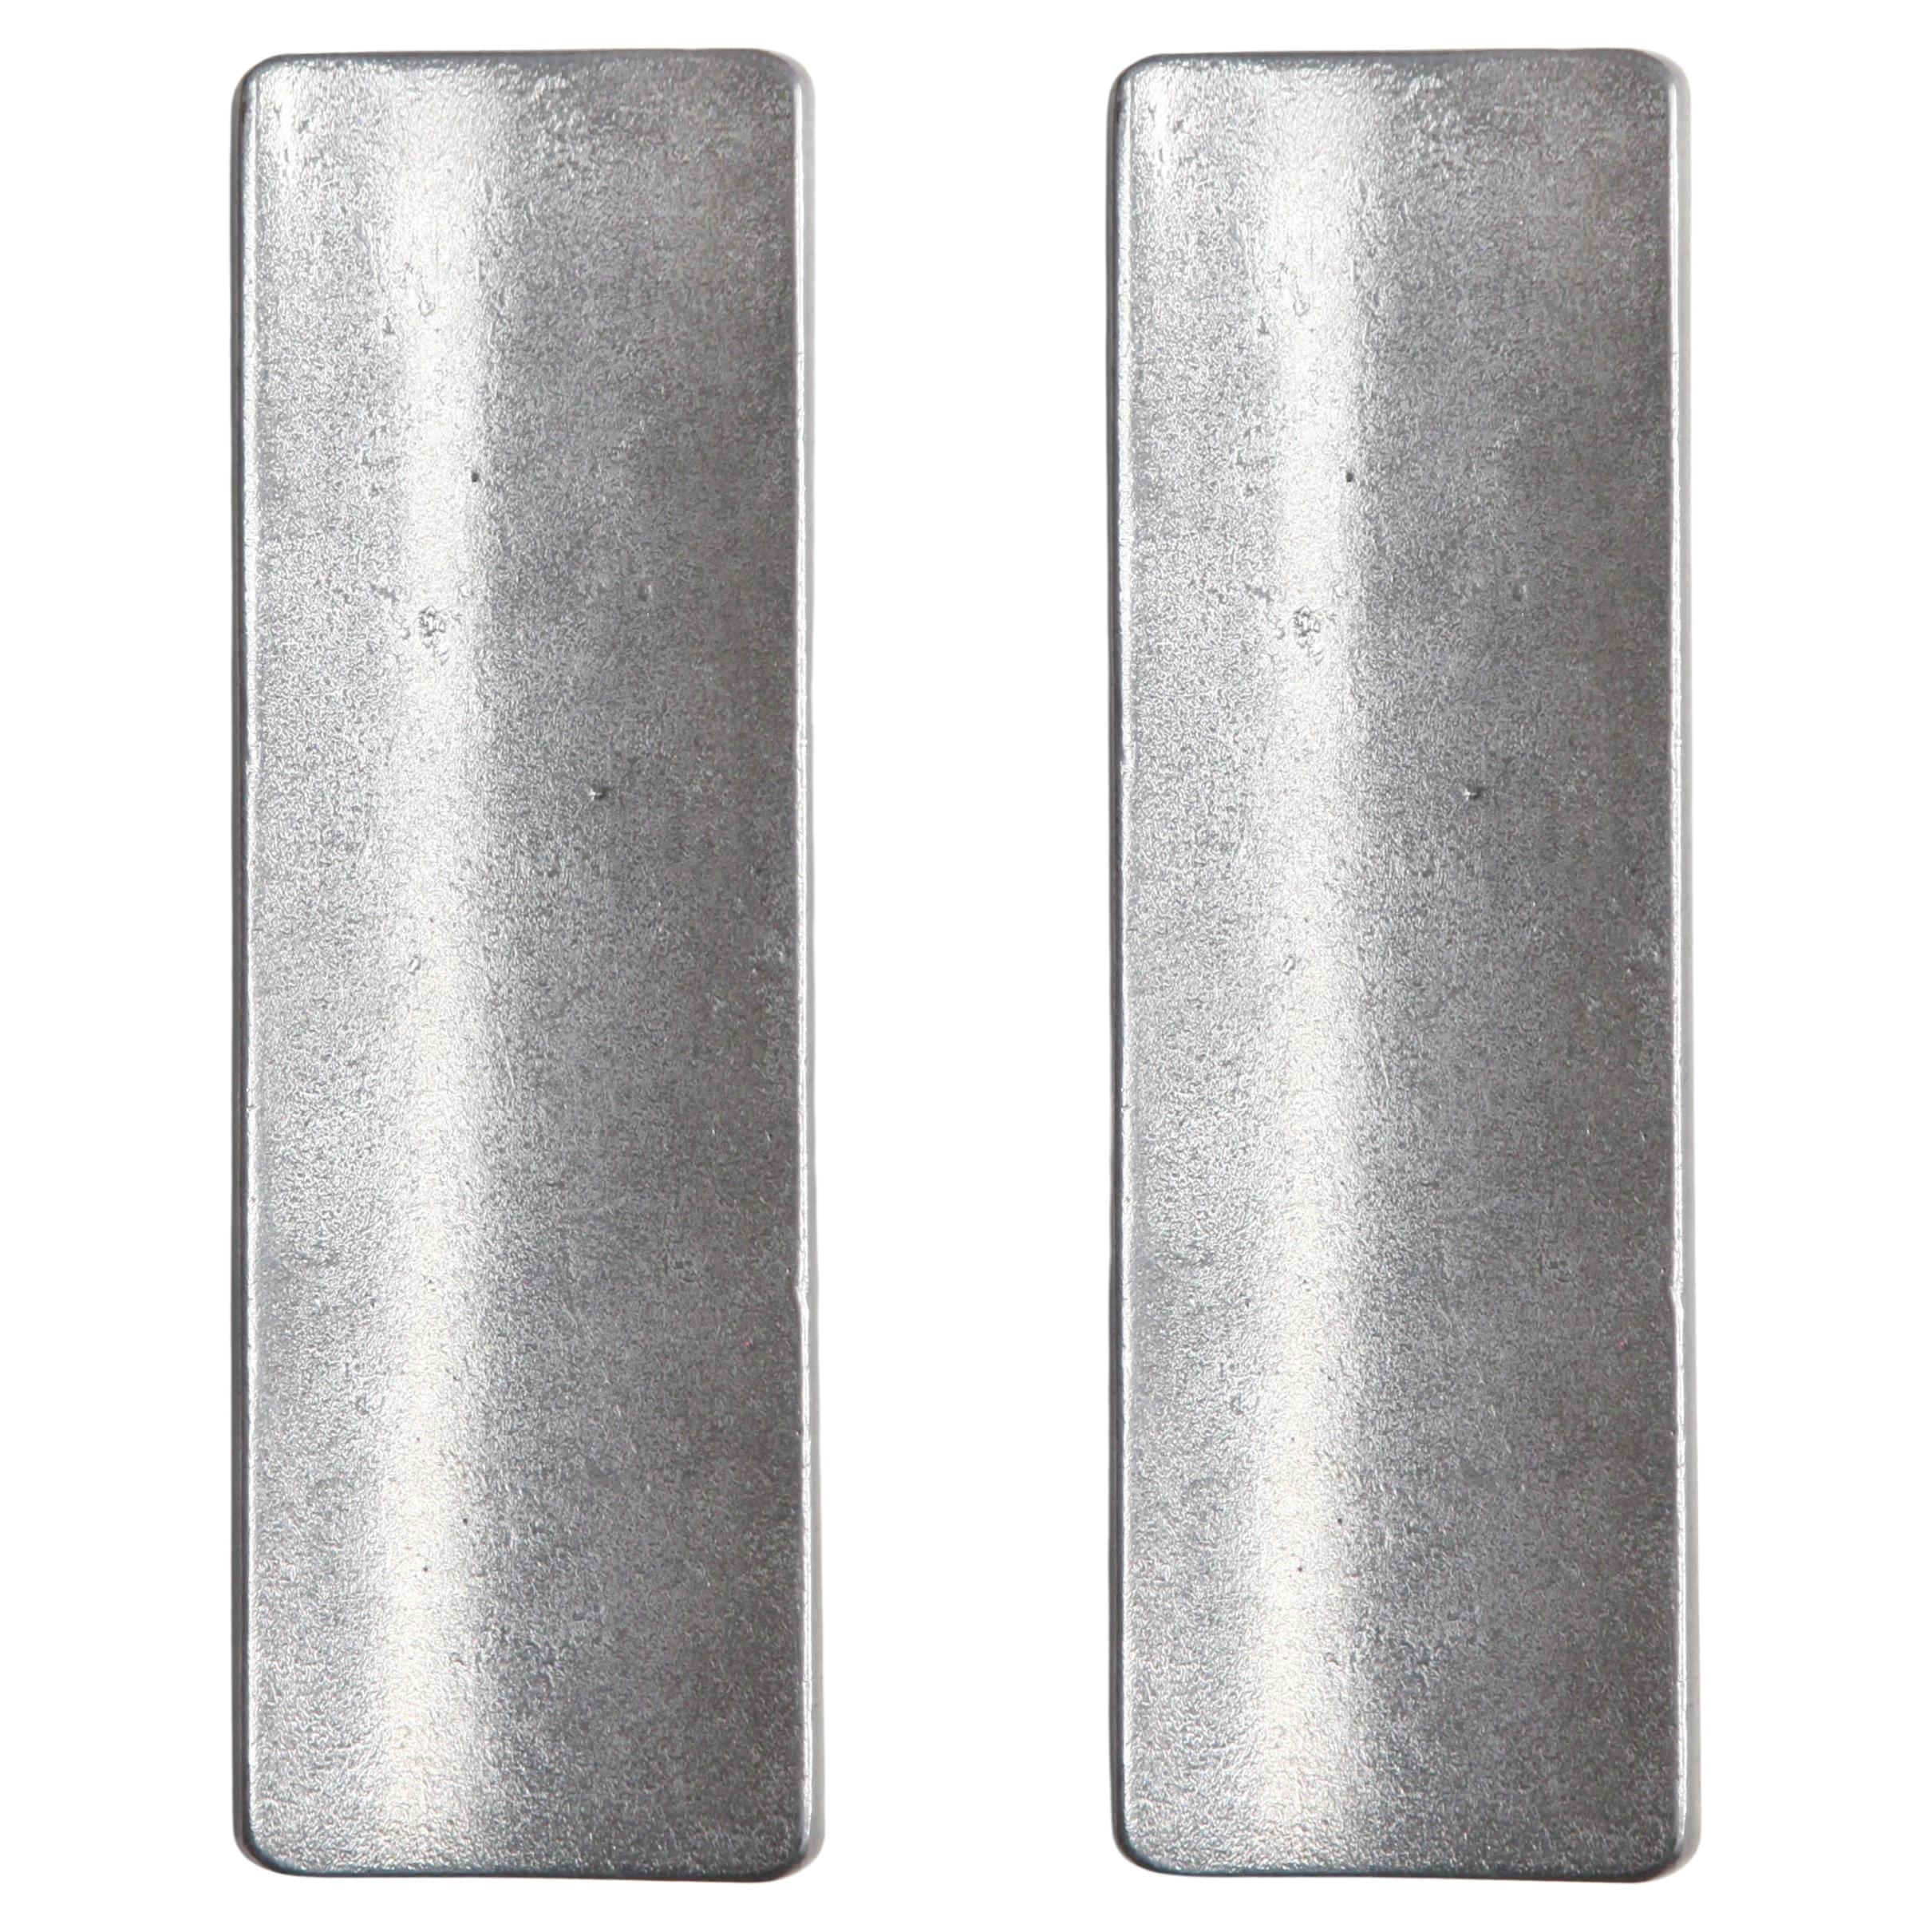 Set of 2 Aluminum Arc Pen Trays by Stem Design